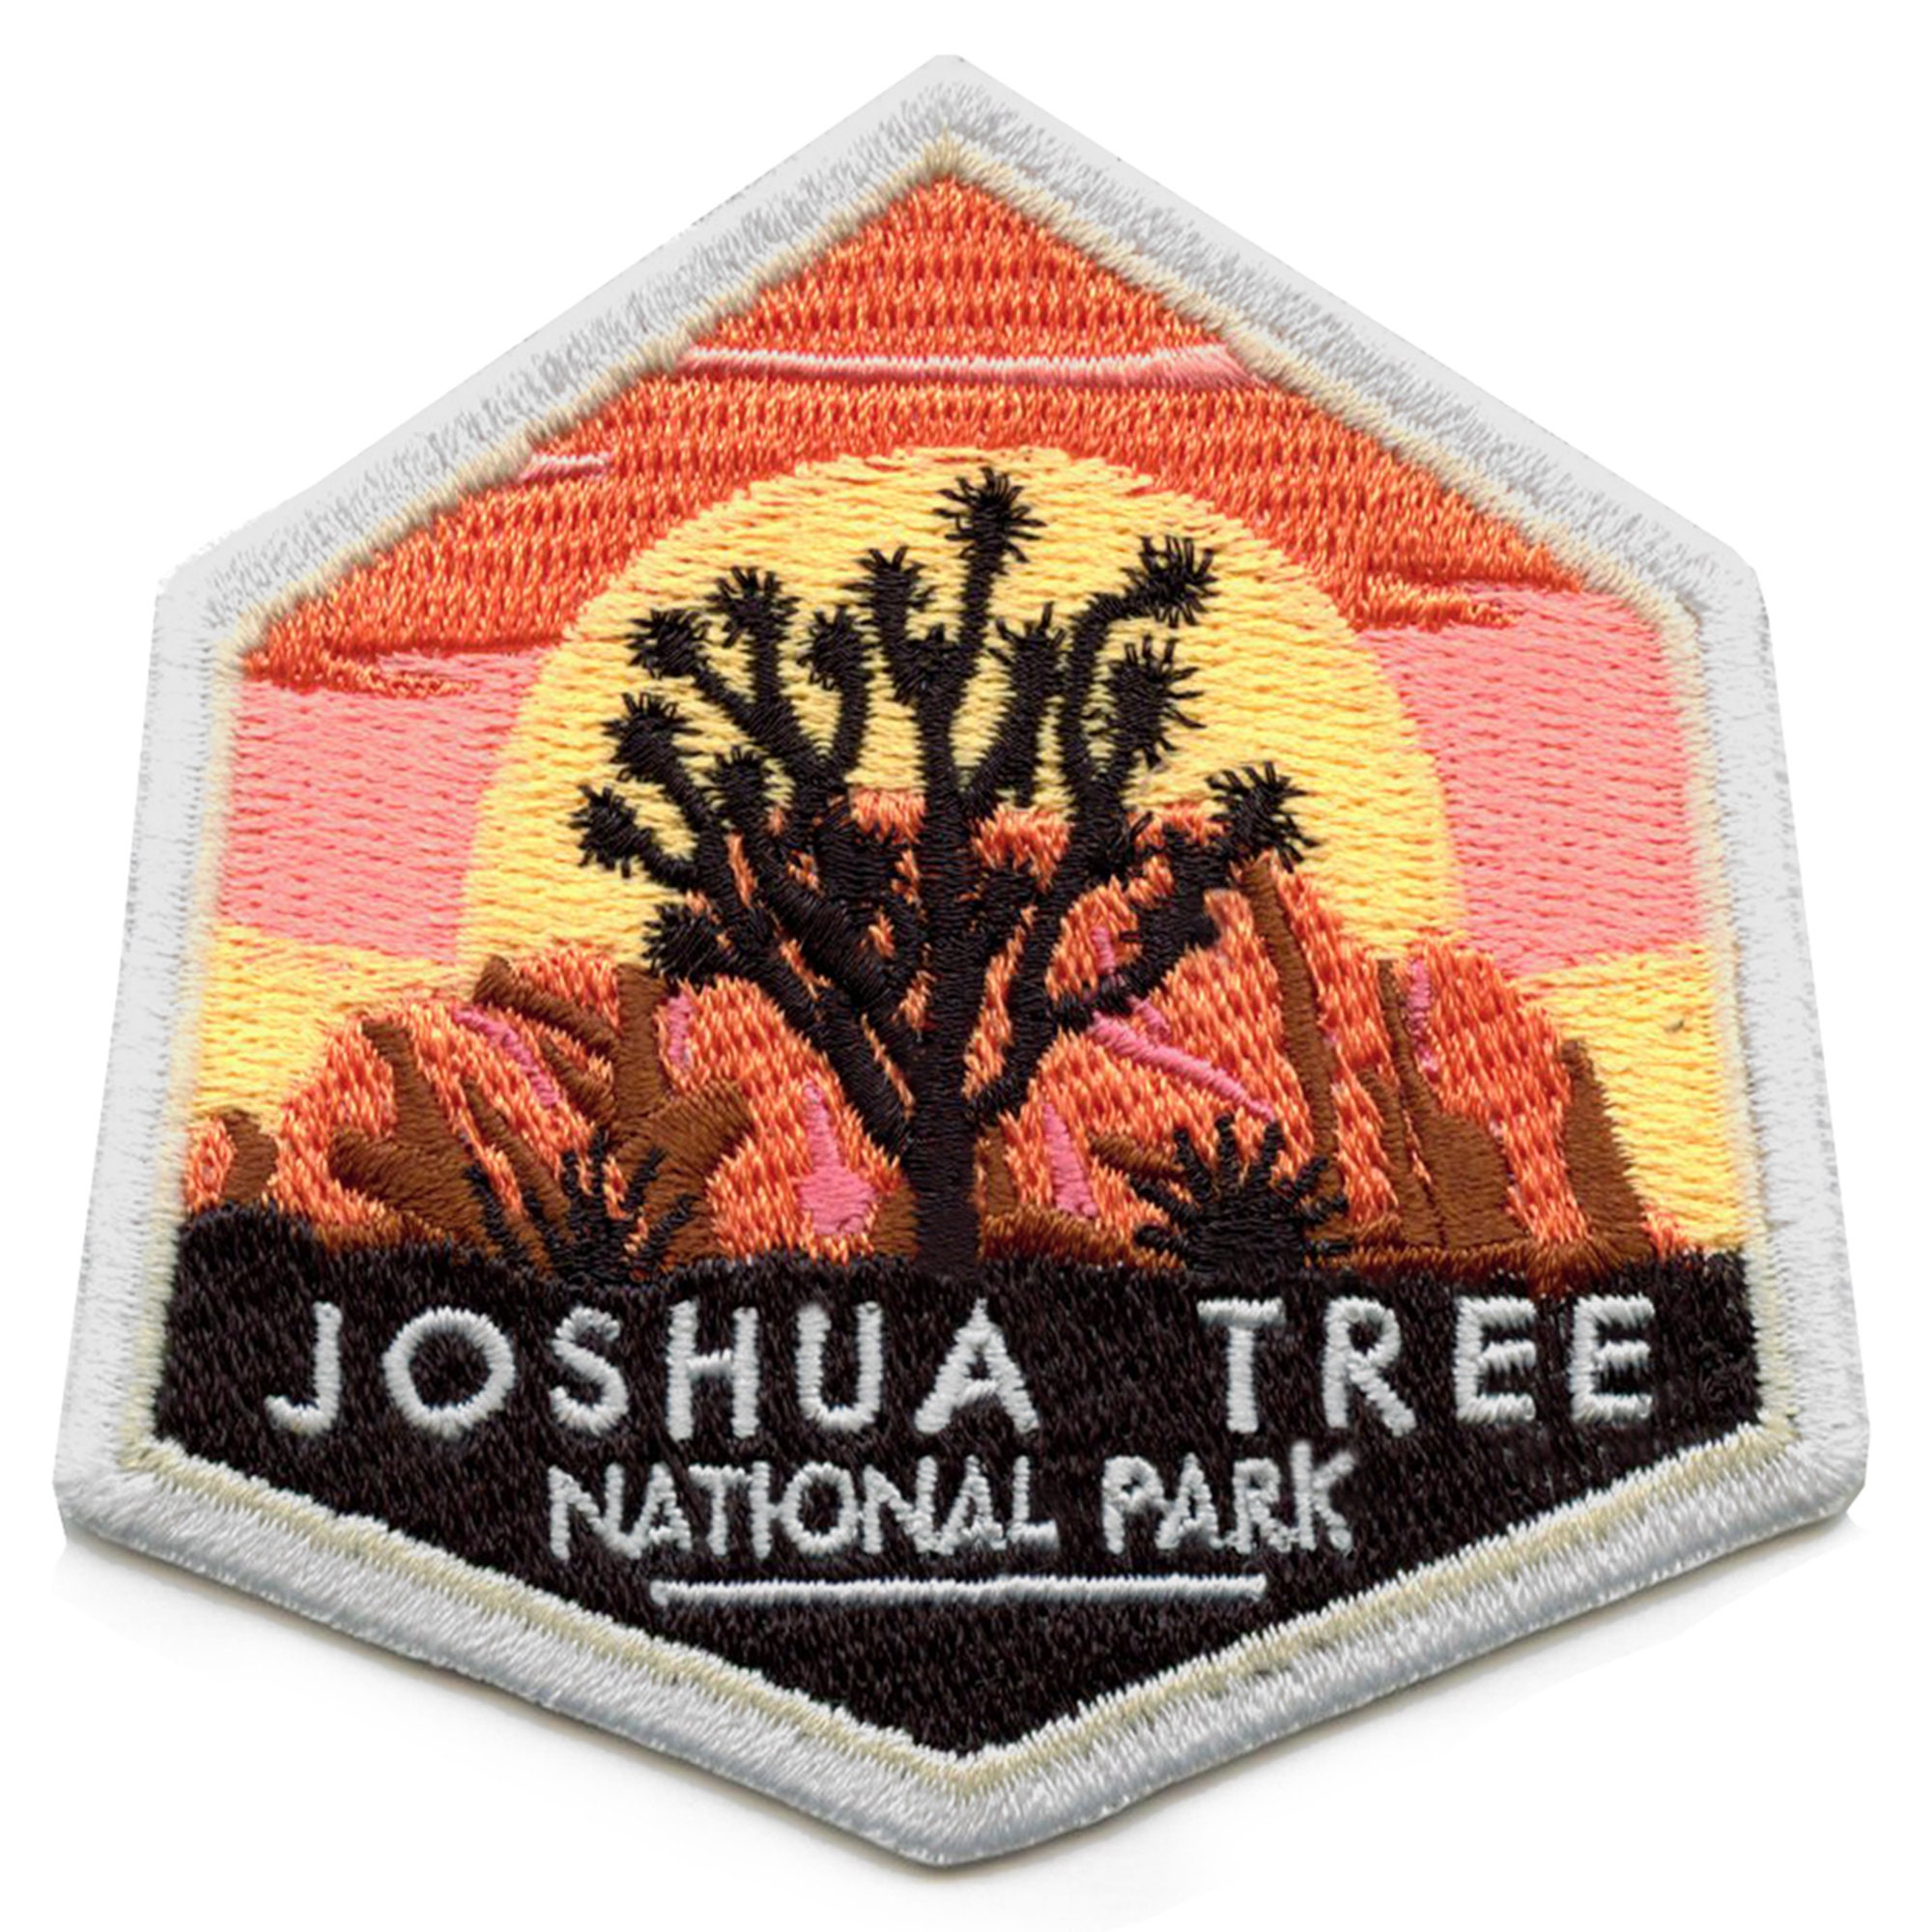 Joshua Tree National Park Patch - PNW Apparel